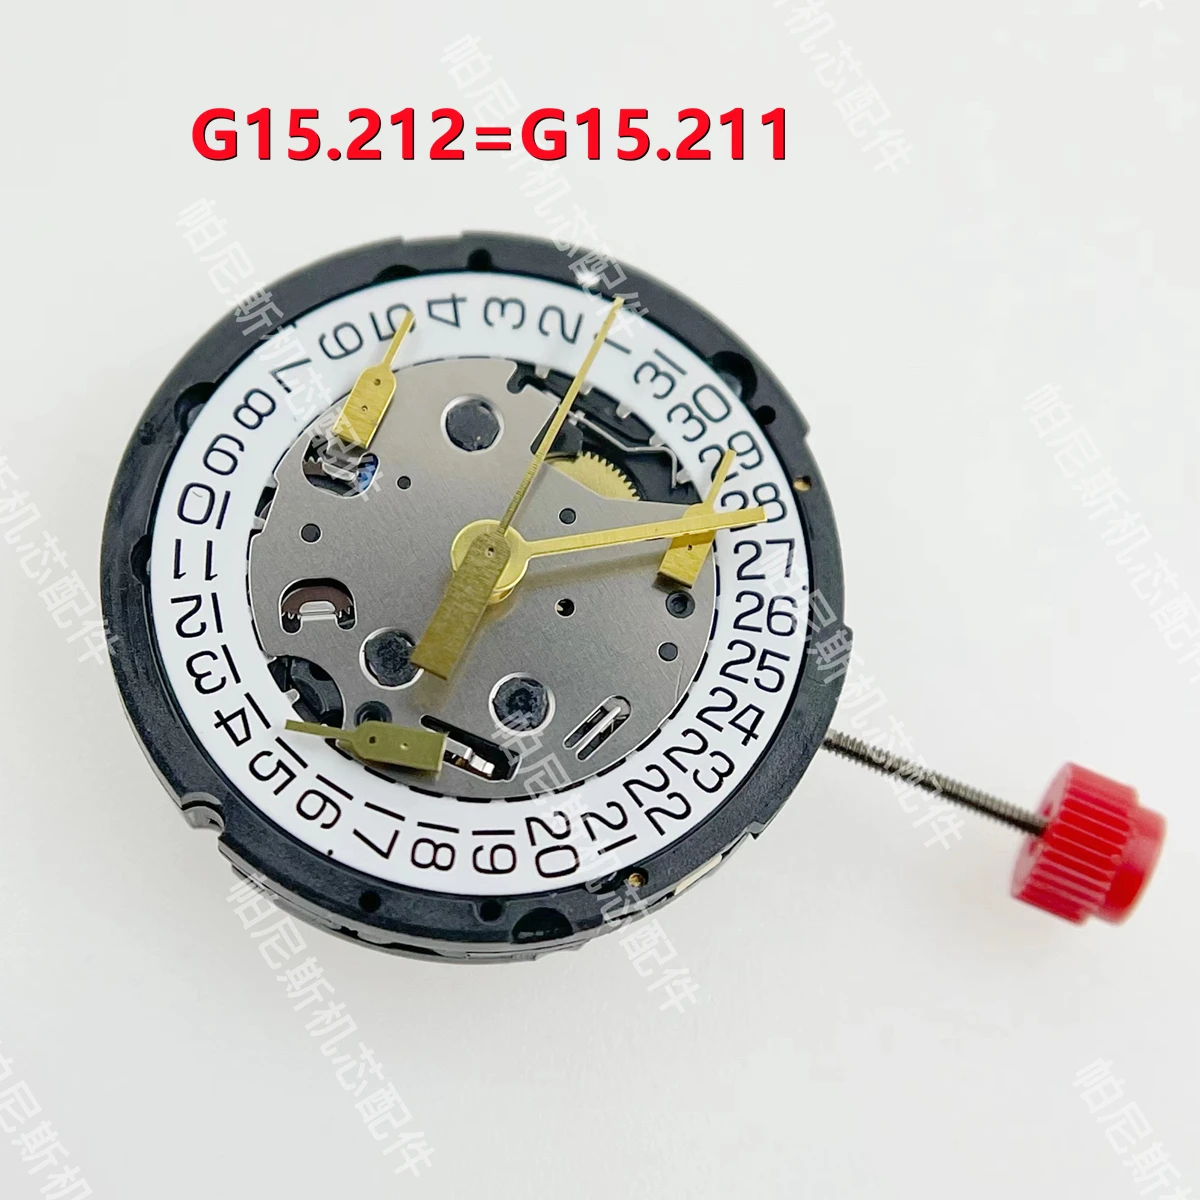 

Watchmaker watch movement parts Swiss original ETA G15.212 / G15.211 movement quartz movement 4 o'clock position date